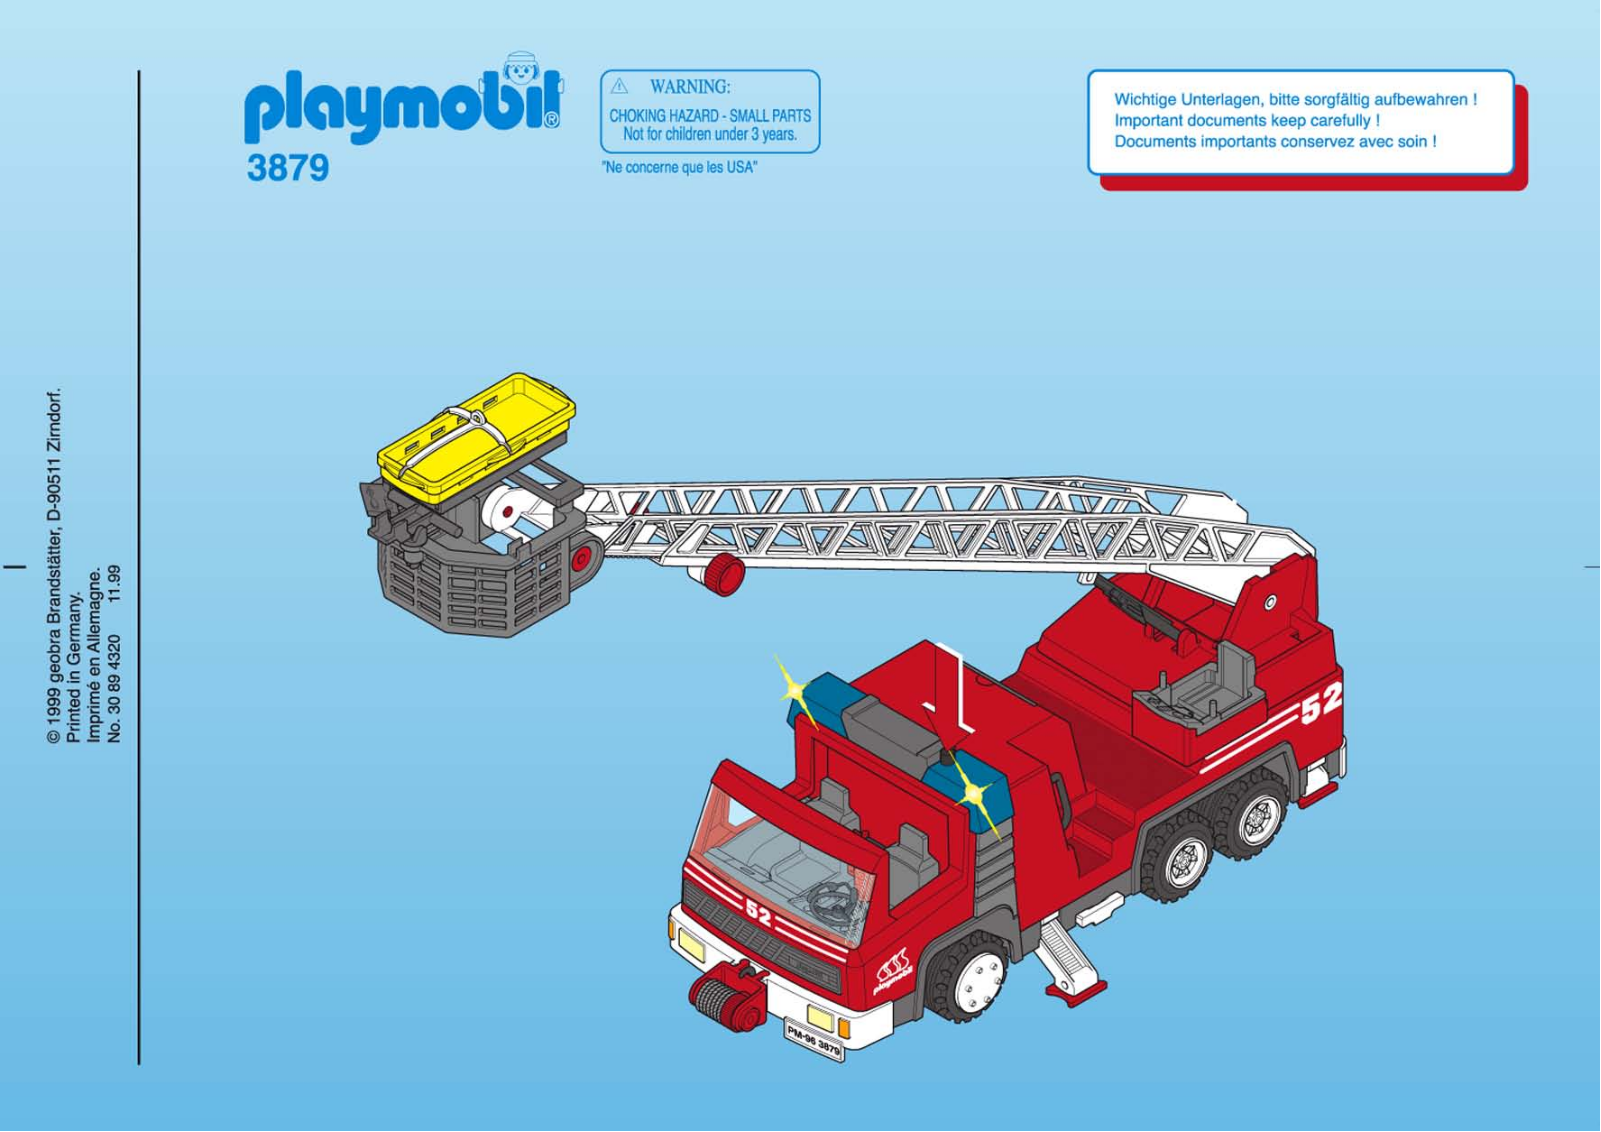 Playmobil 3879 Instructions